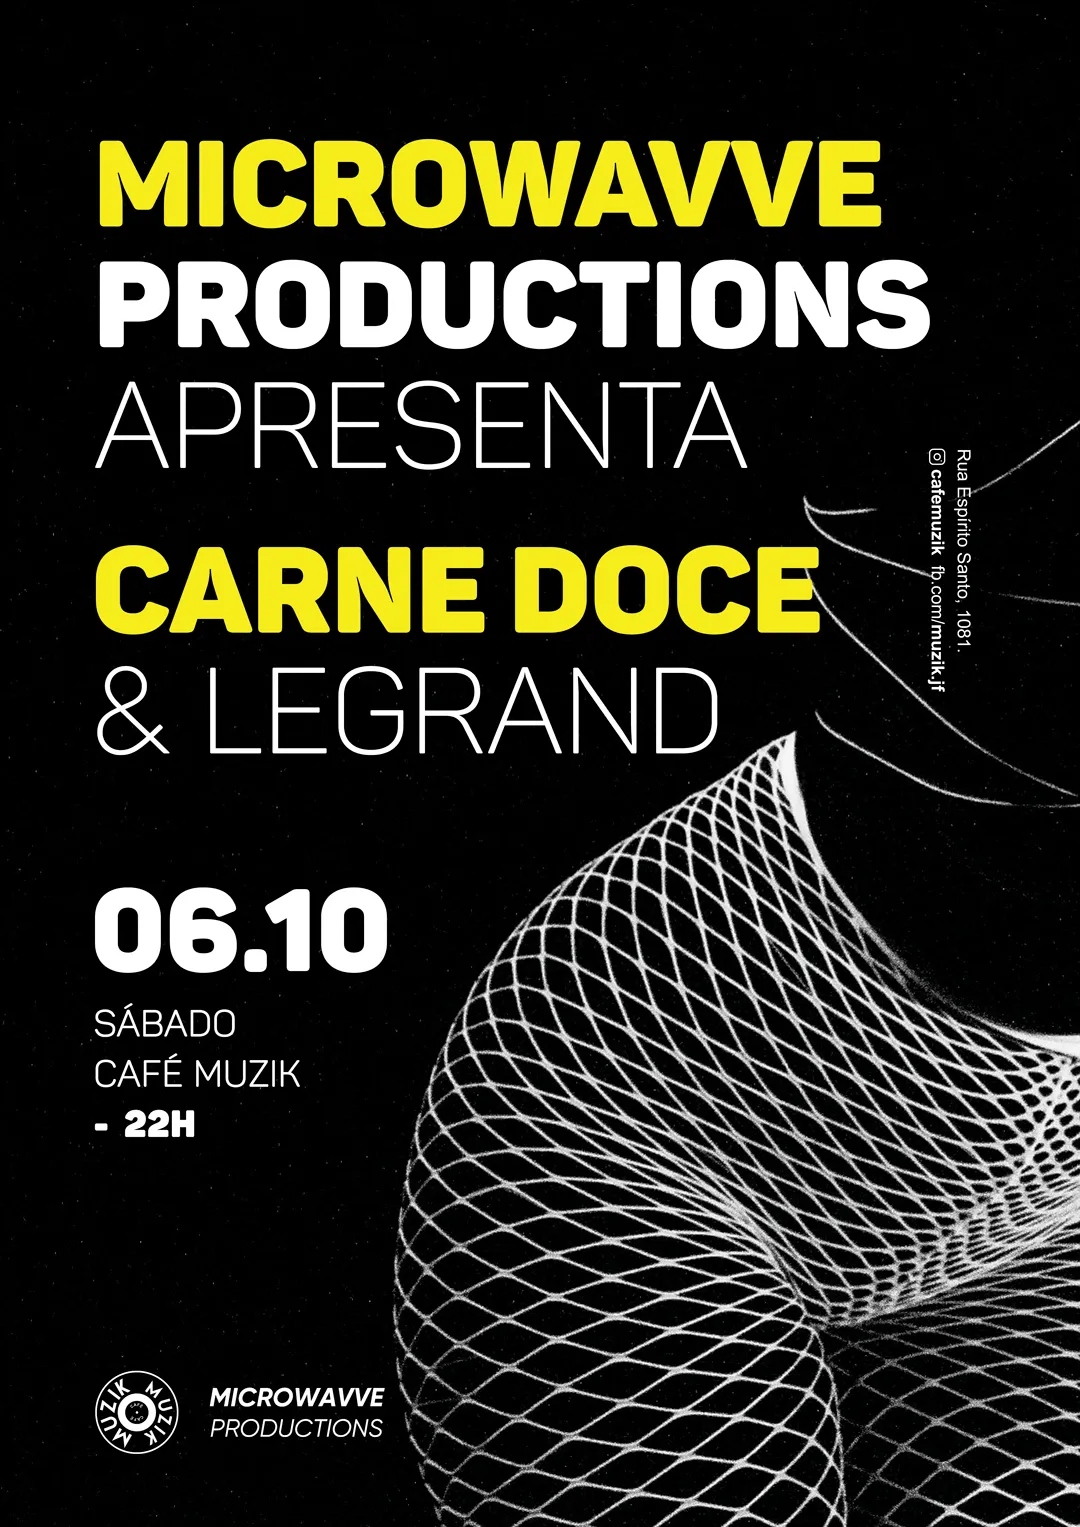 Microwavve Productions Apresenta Carne Doce & Legrand